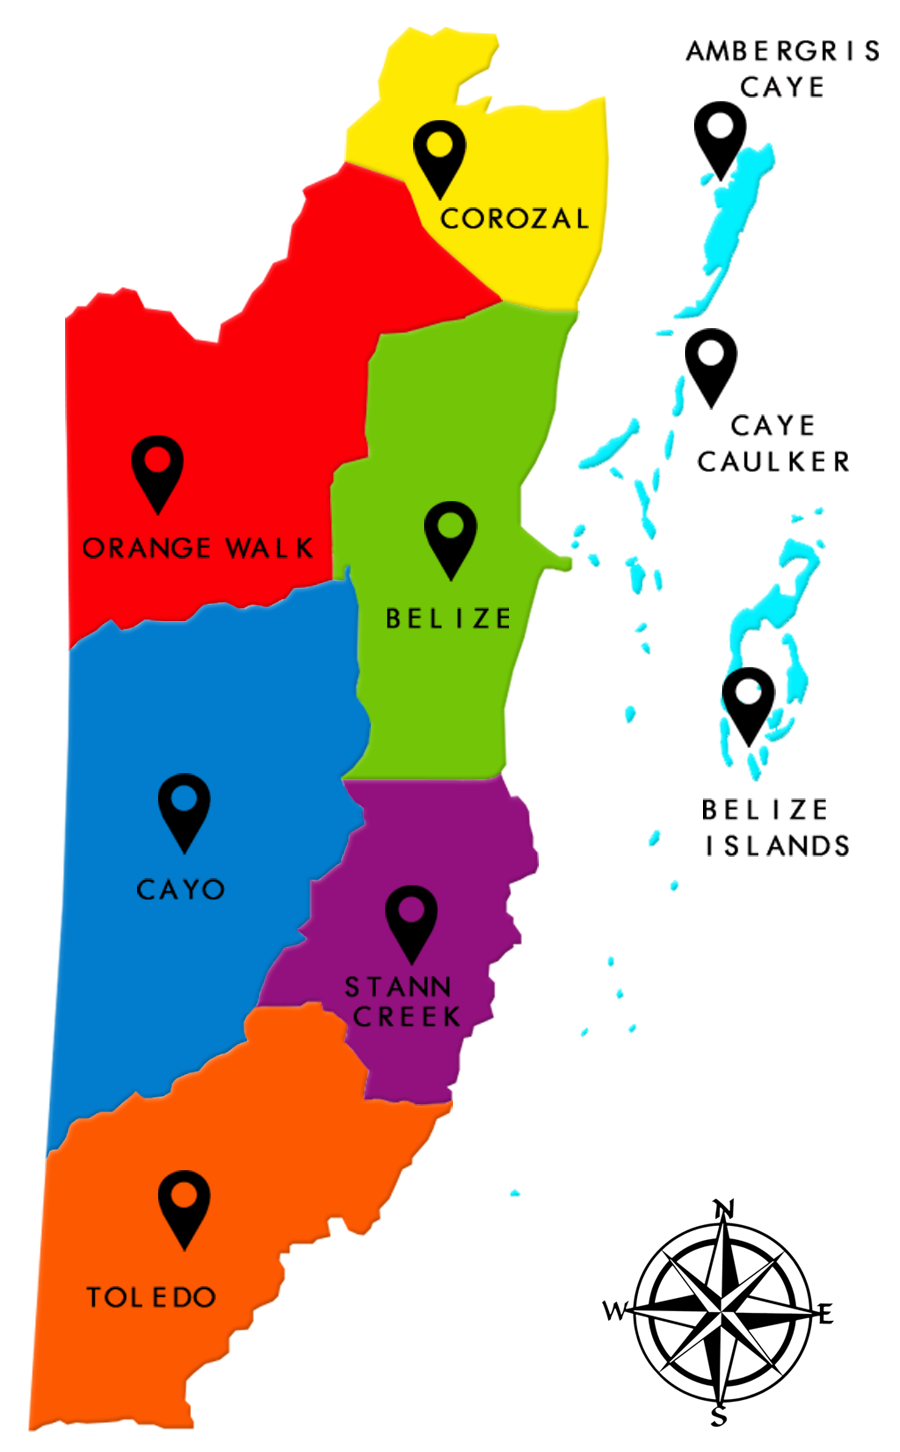 Belize Travel Destinations | Belize Travel Guide